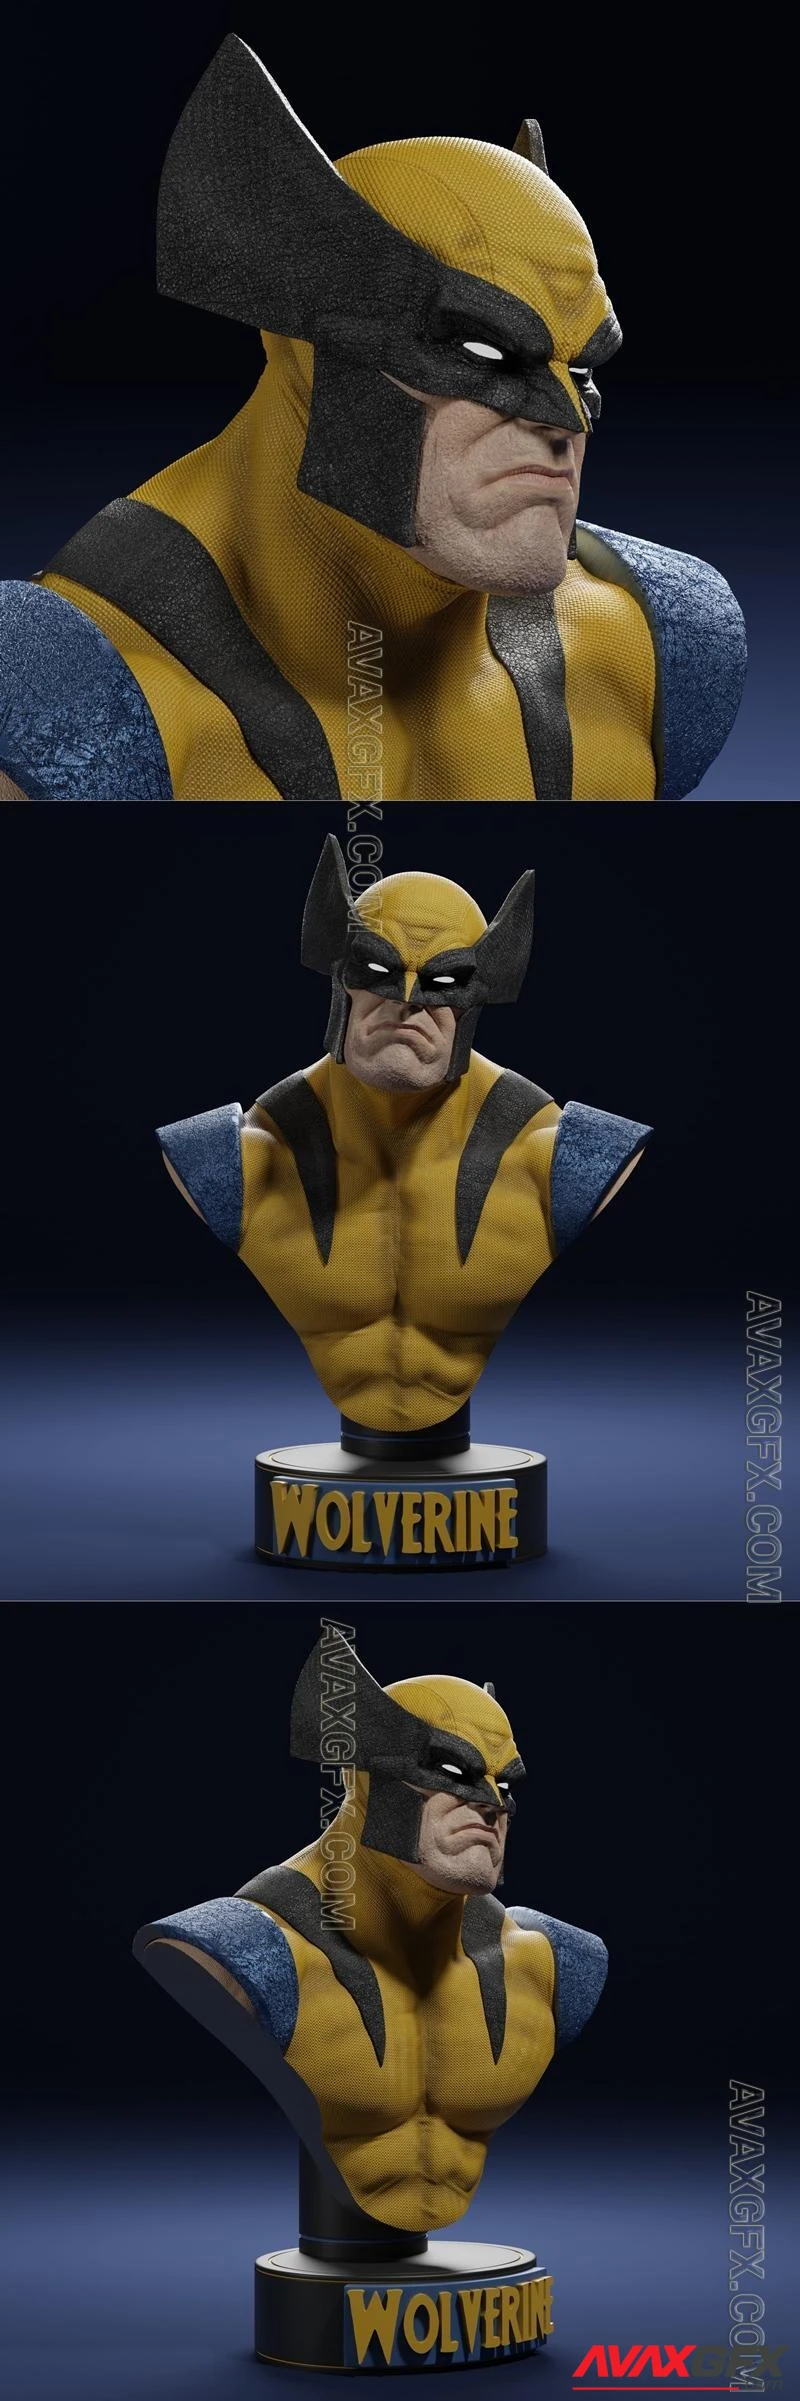 Wolverine Bust split - STL 3D Model